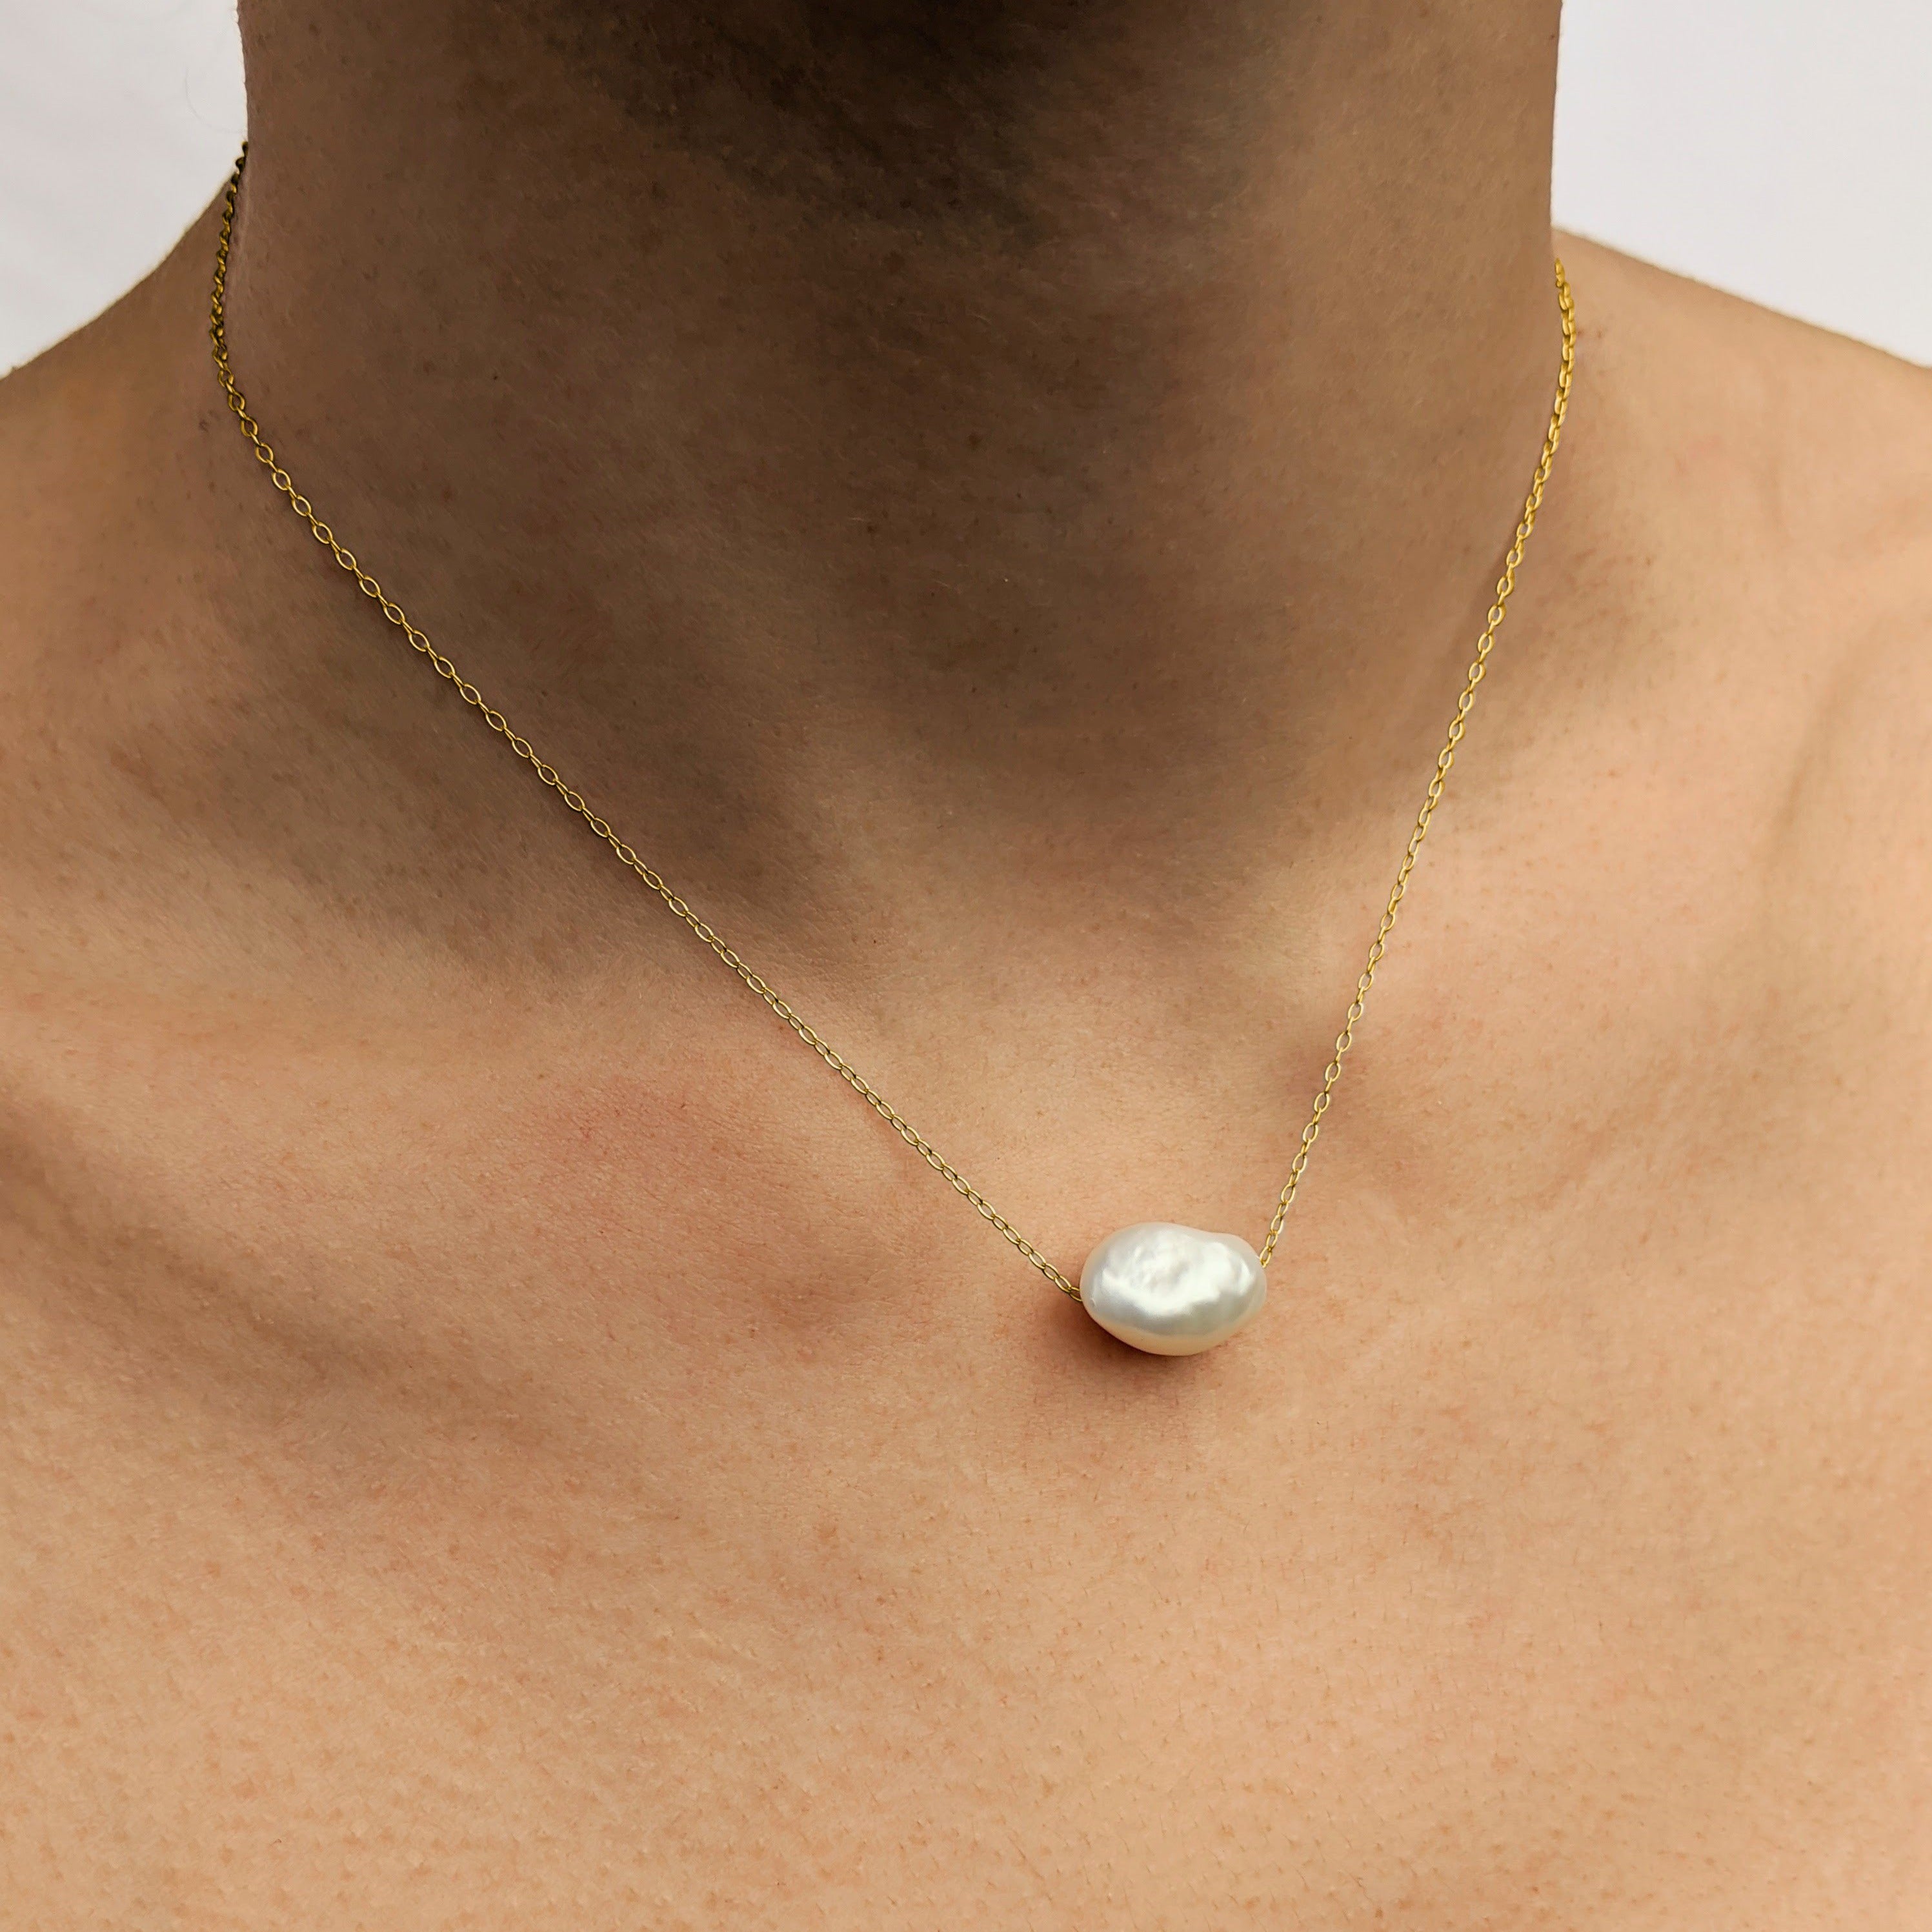 Single sideways large pearl necklace